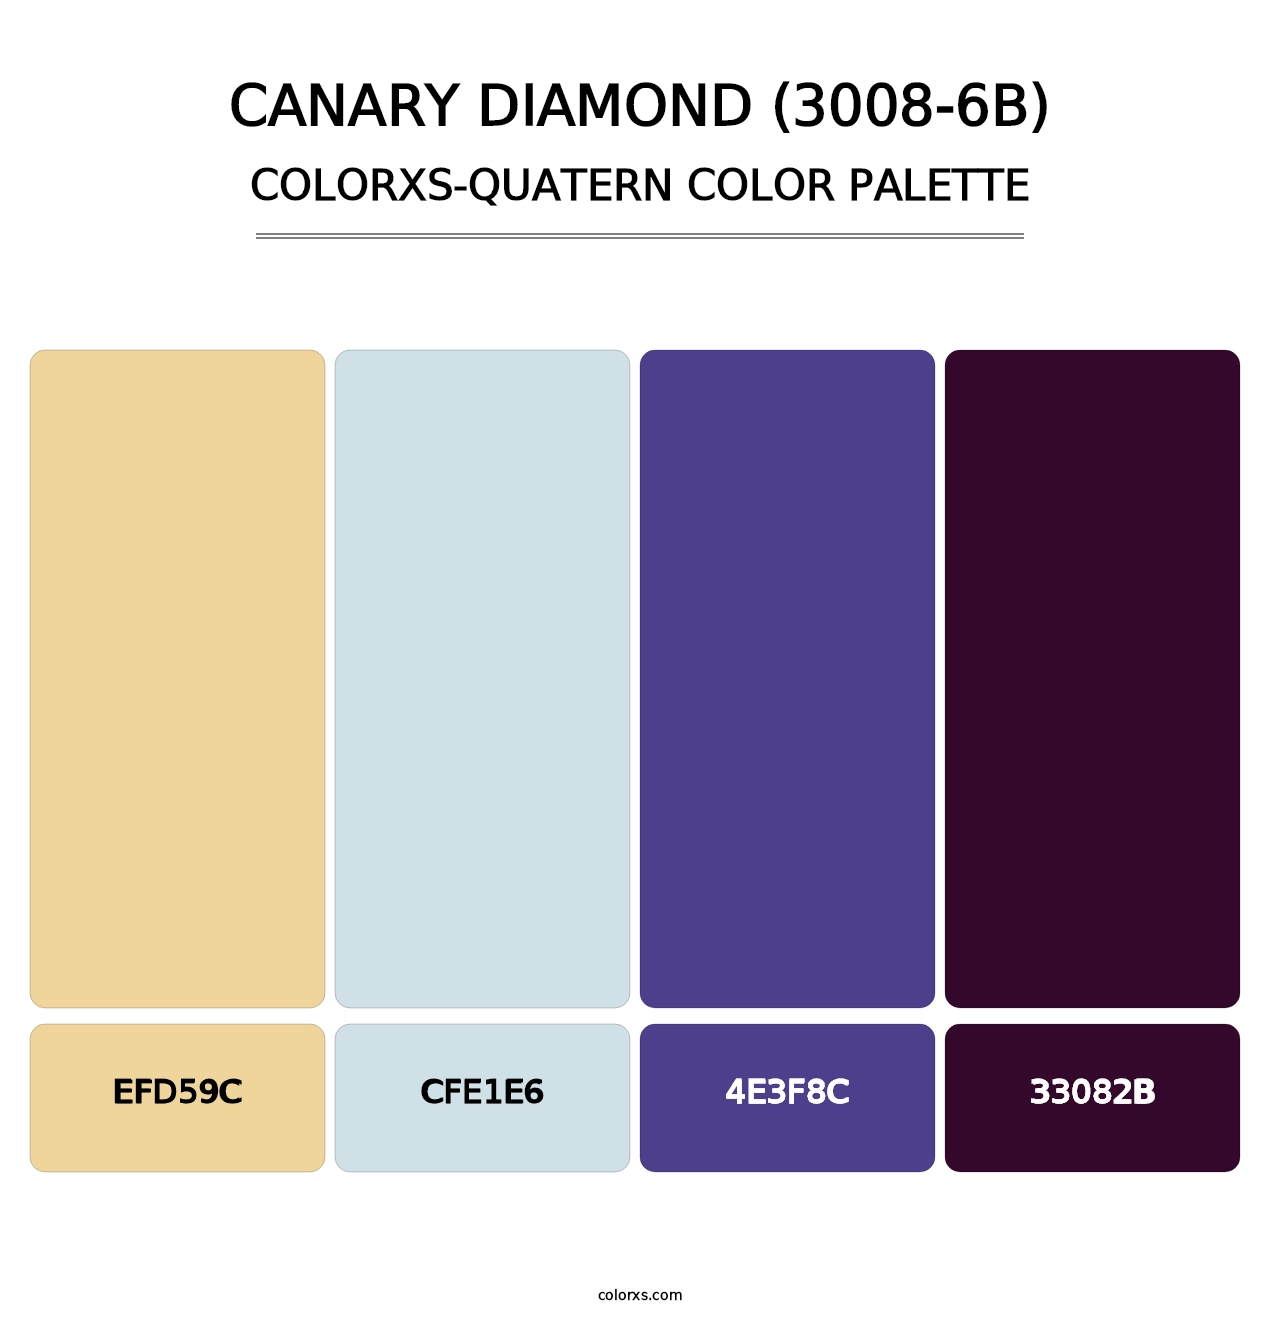 Canary Diamond (3008-6B) - Colorxs Quatern Palette